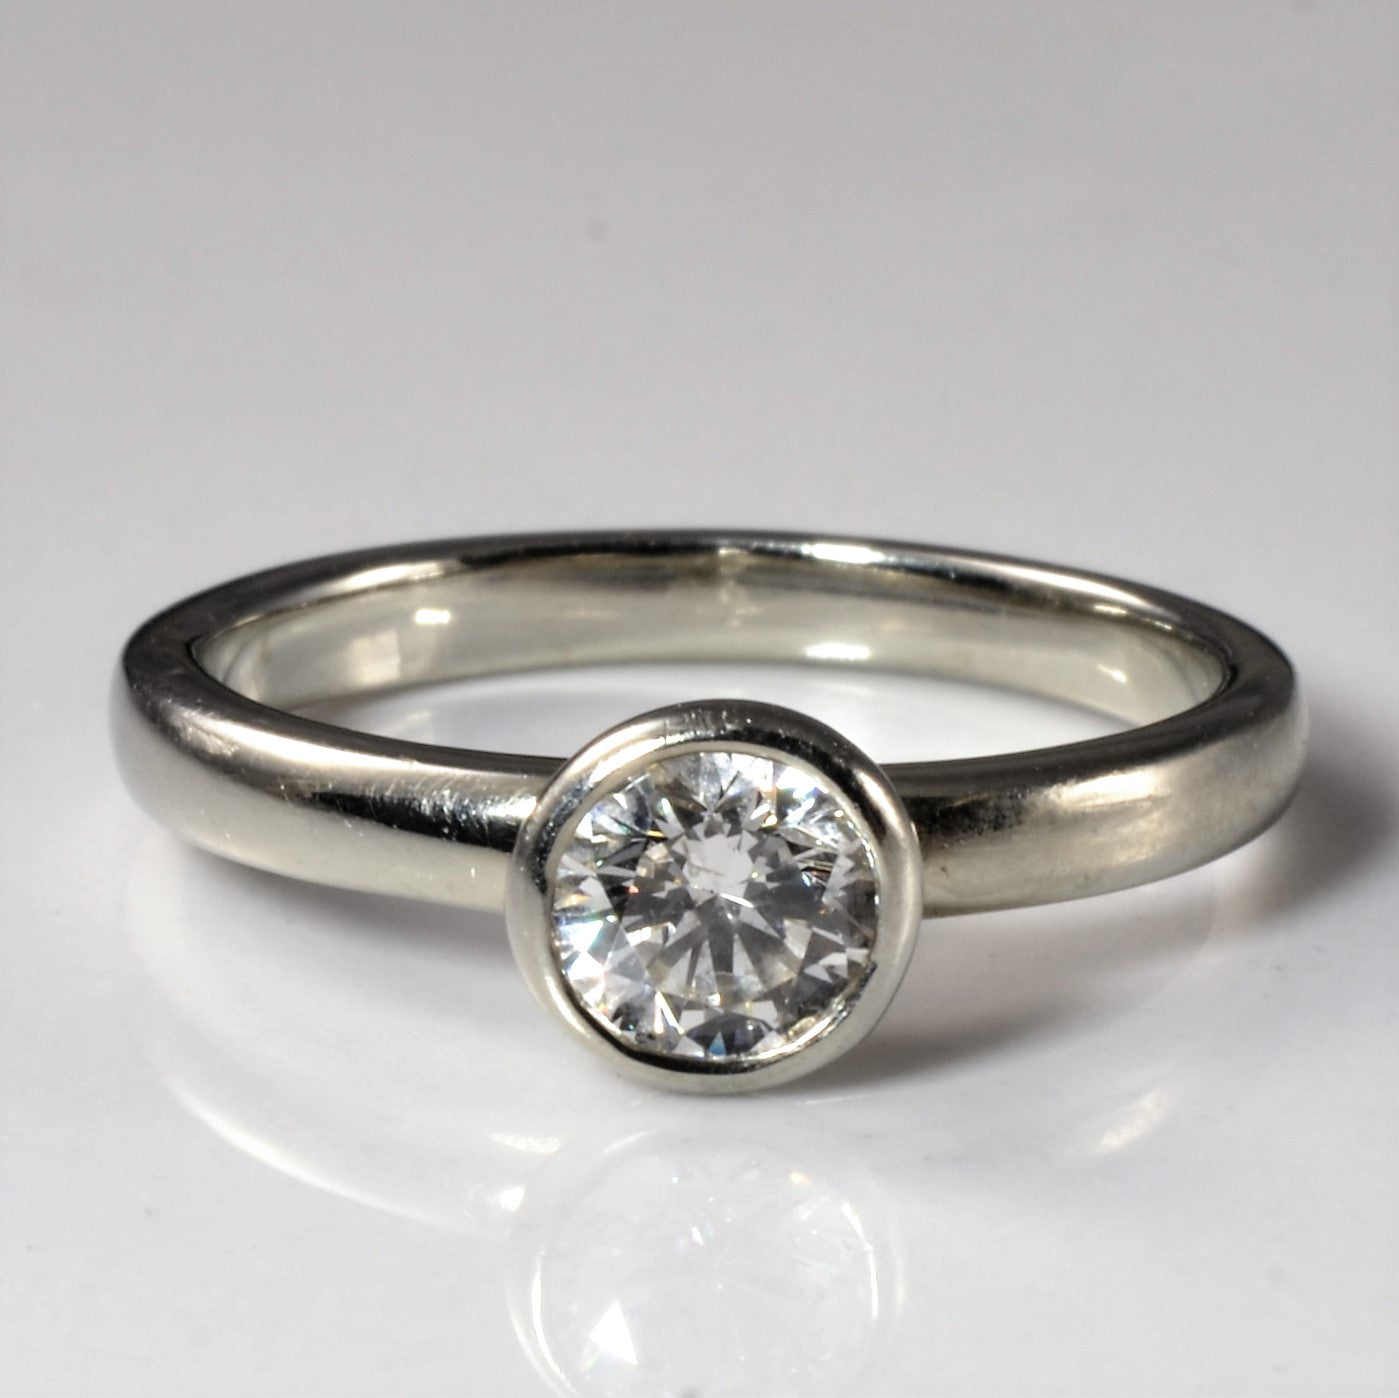 Spence Diamonds' Bezel Set Solitaire Diamond Ring | 0.51ct | SZ 5.5 |